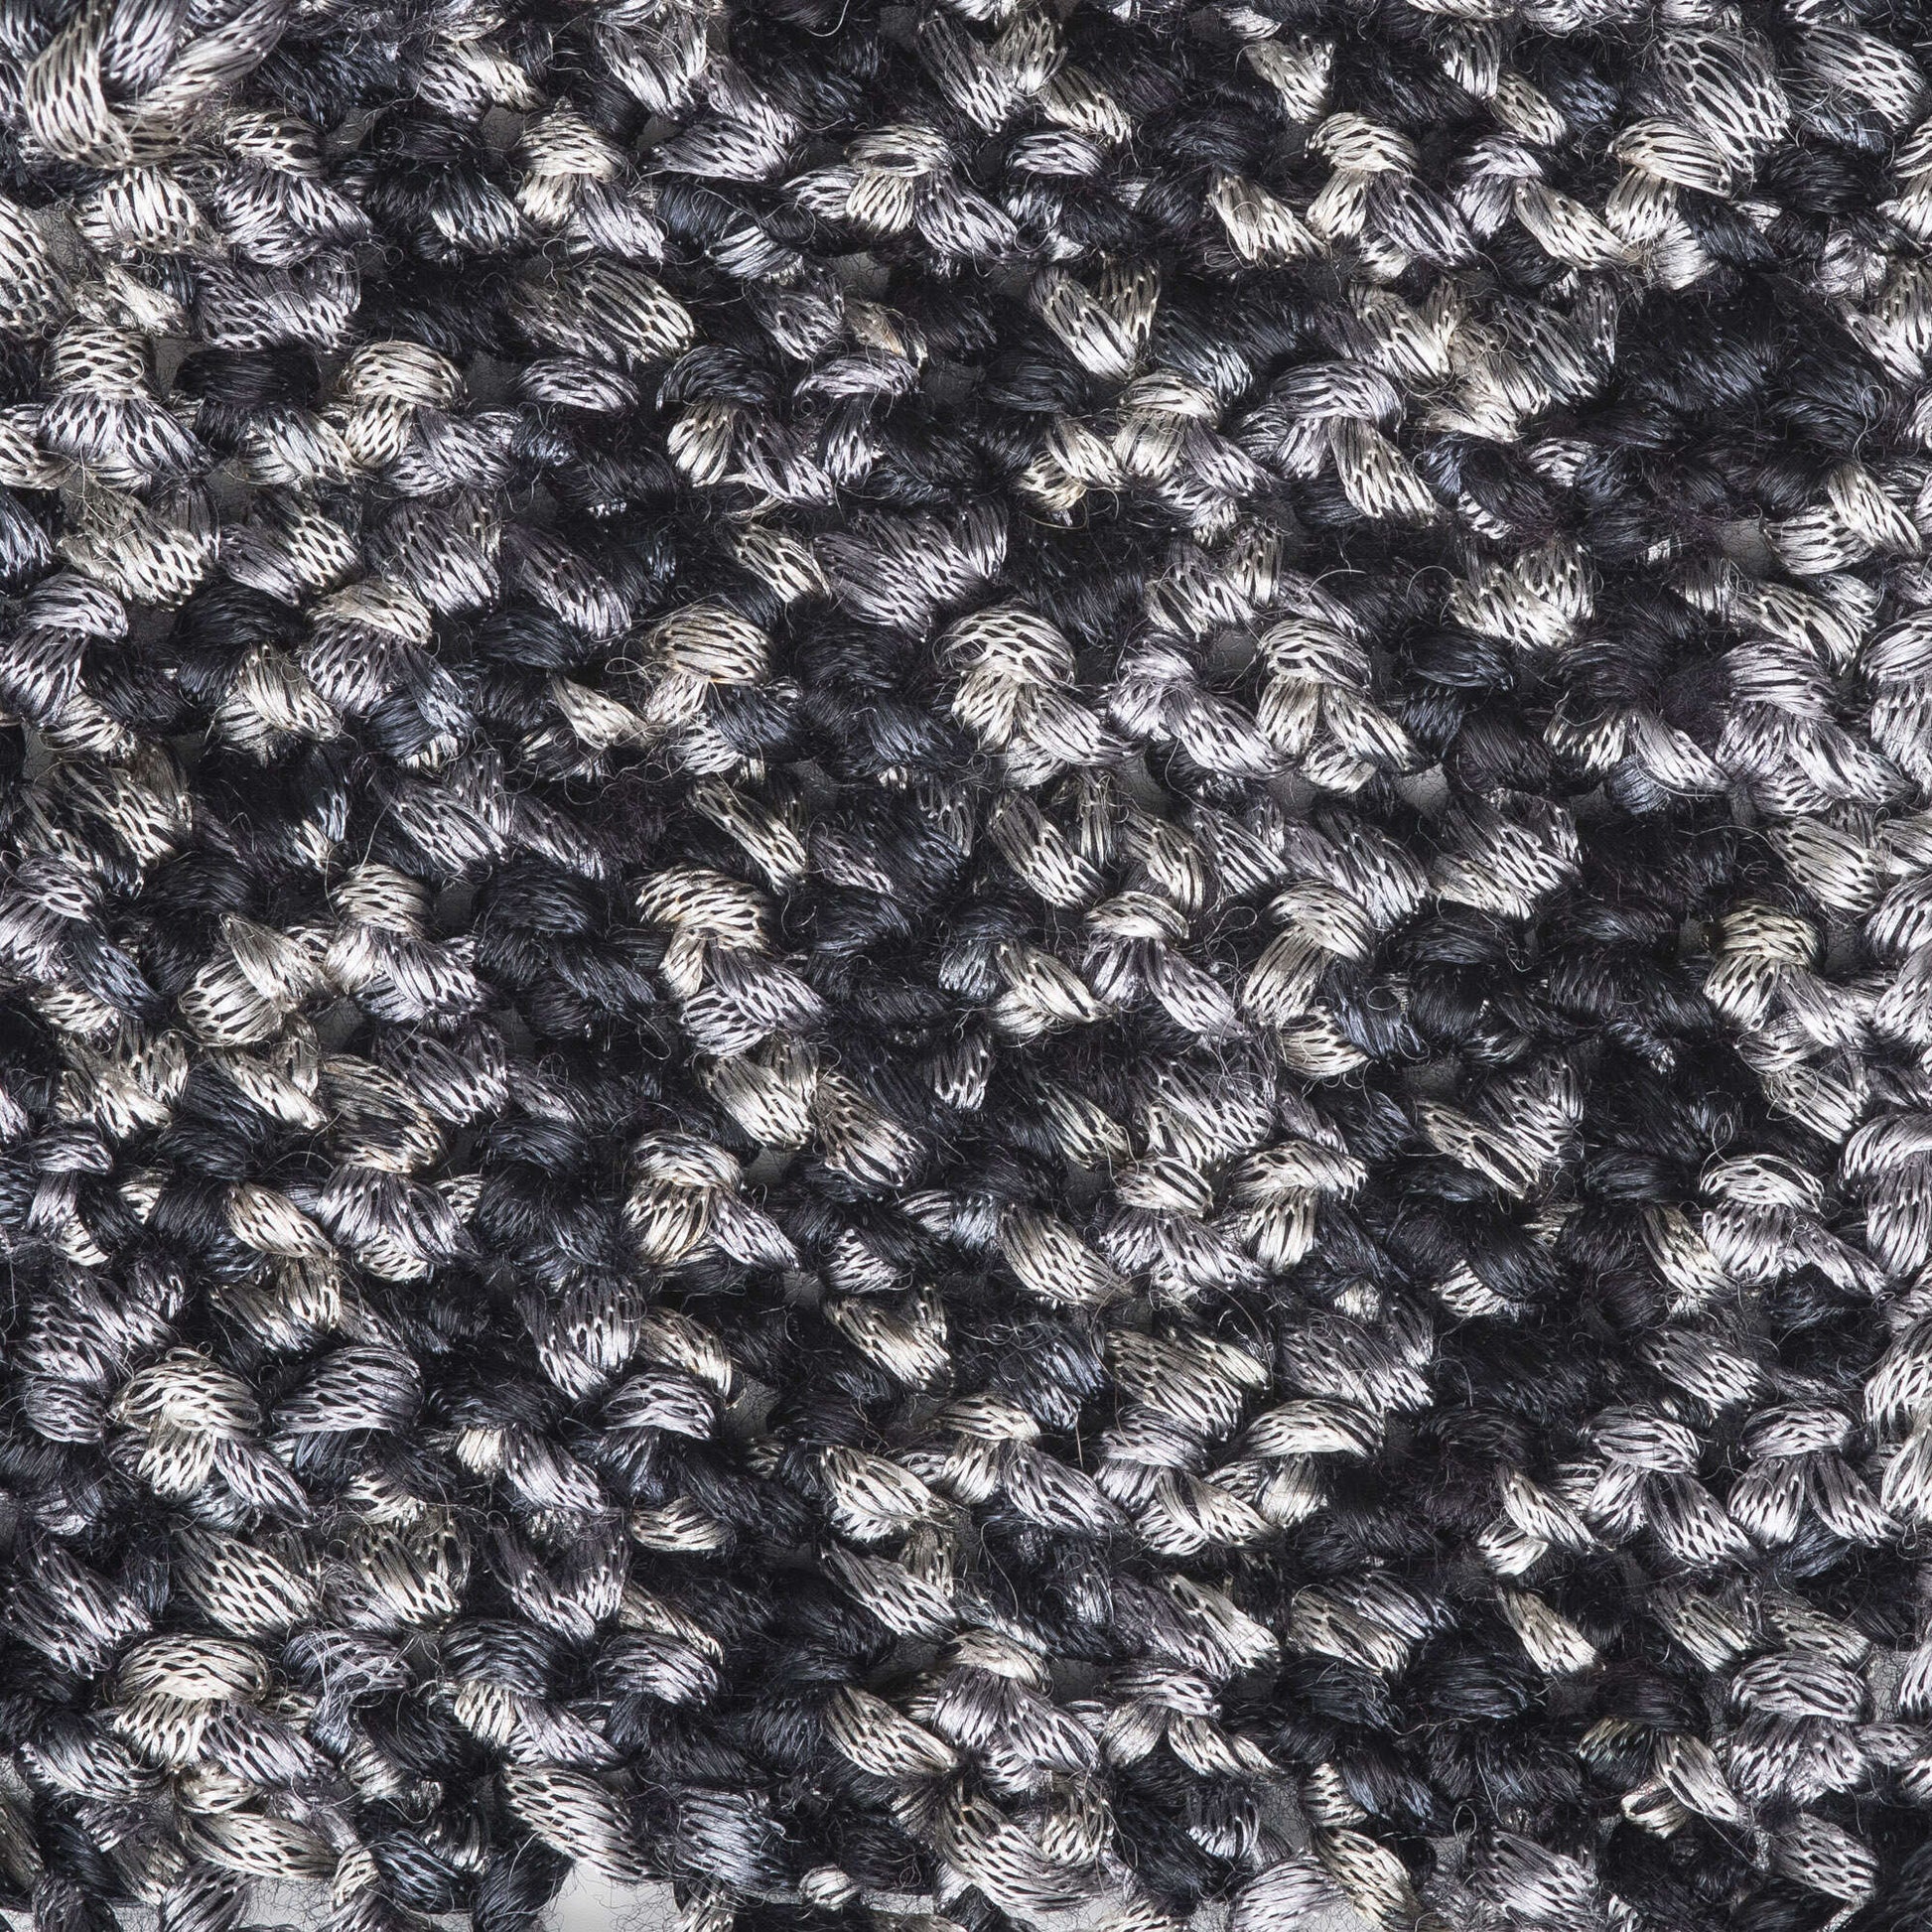 Patons Metallic Yarn - Discontinued Black Marble